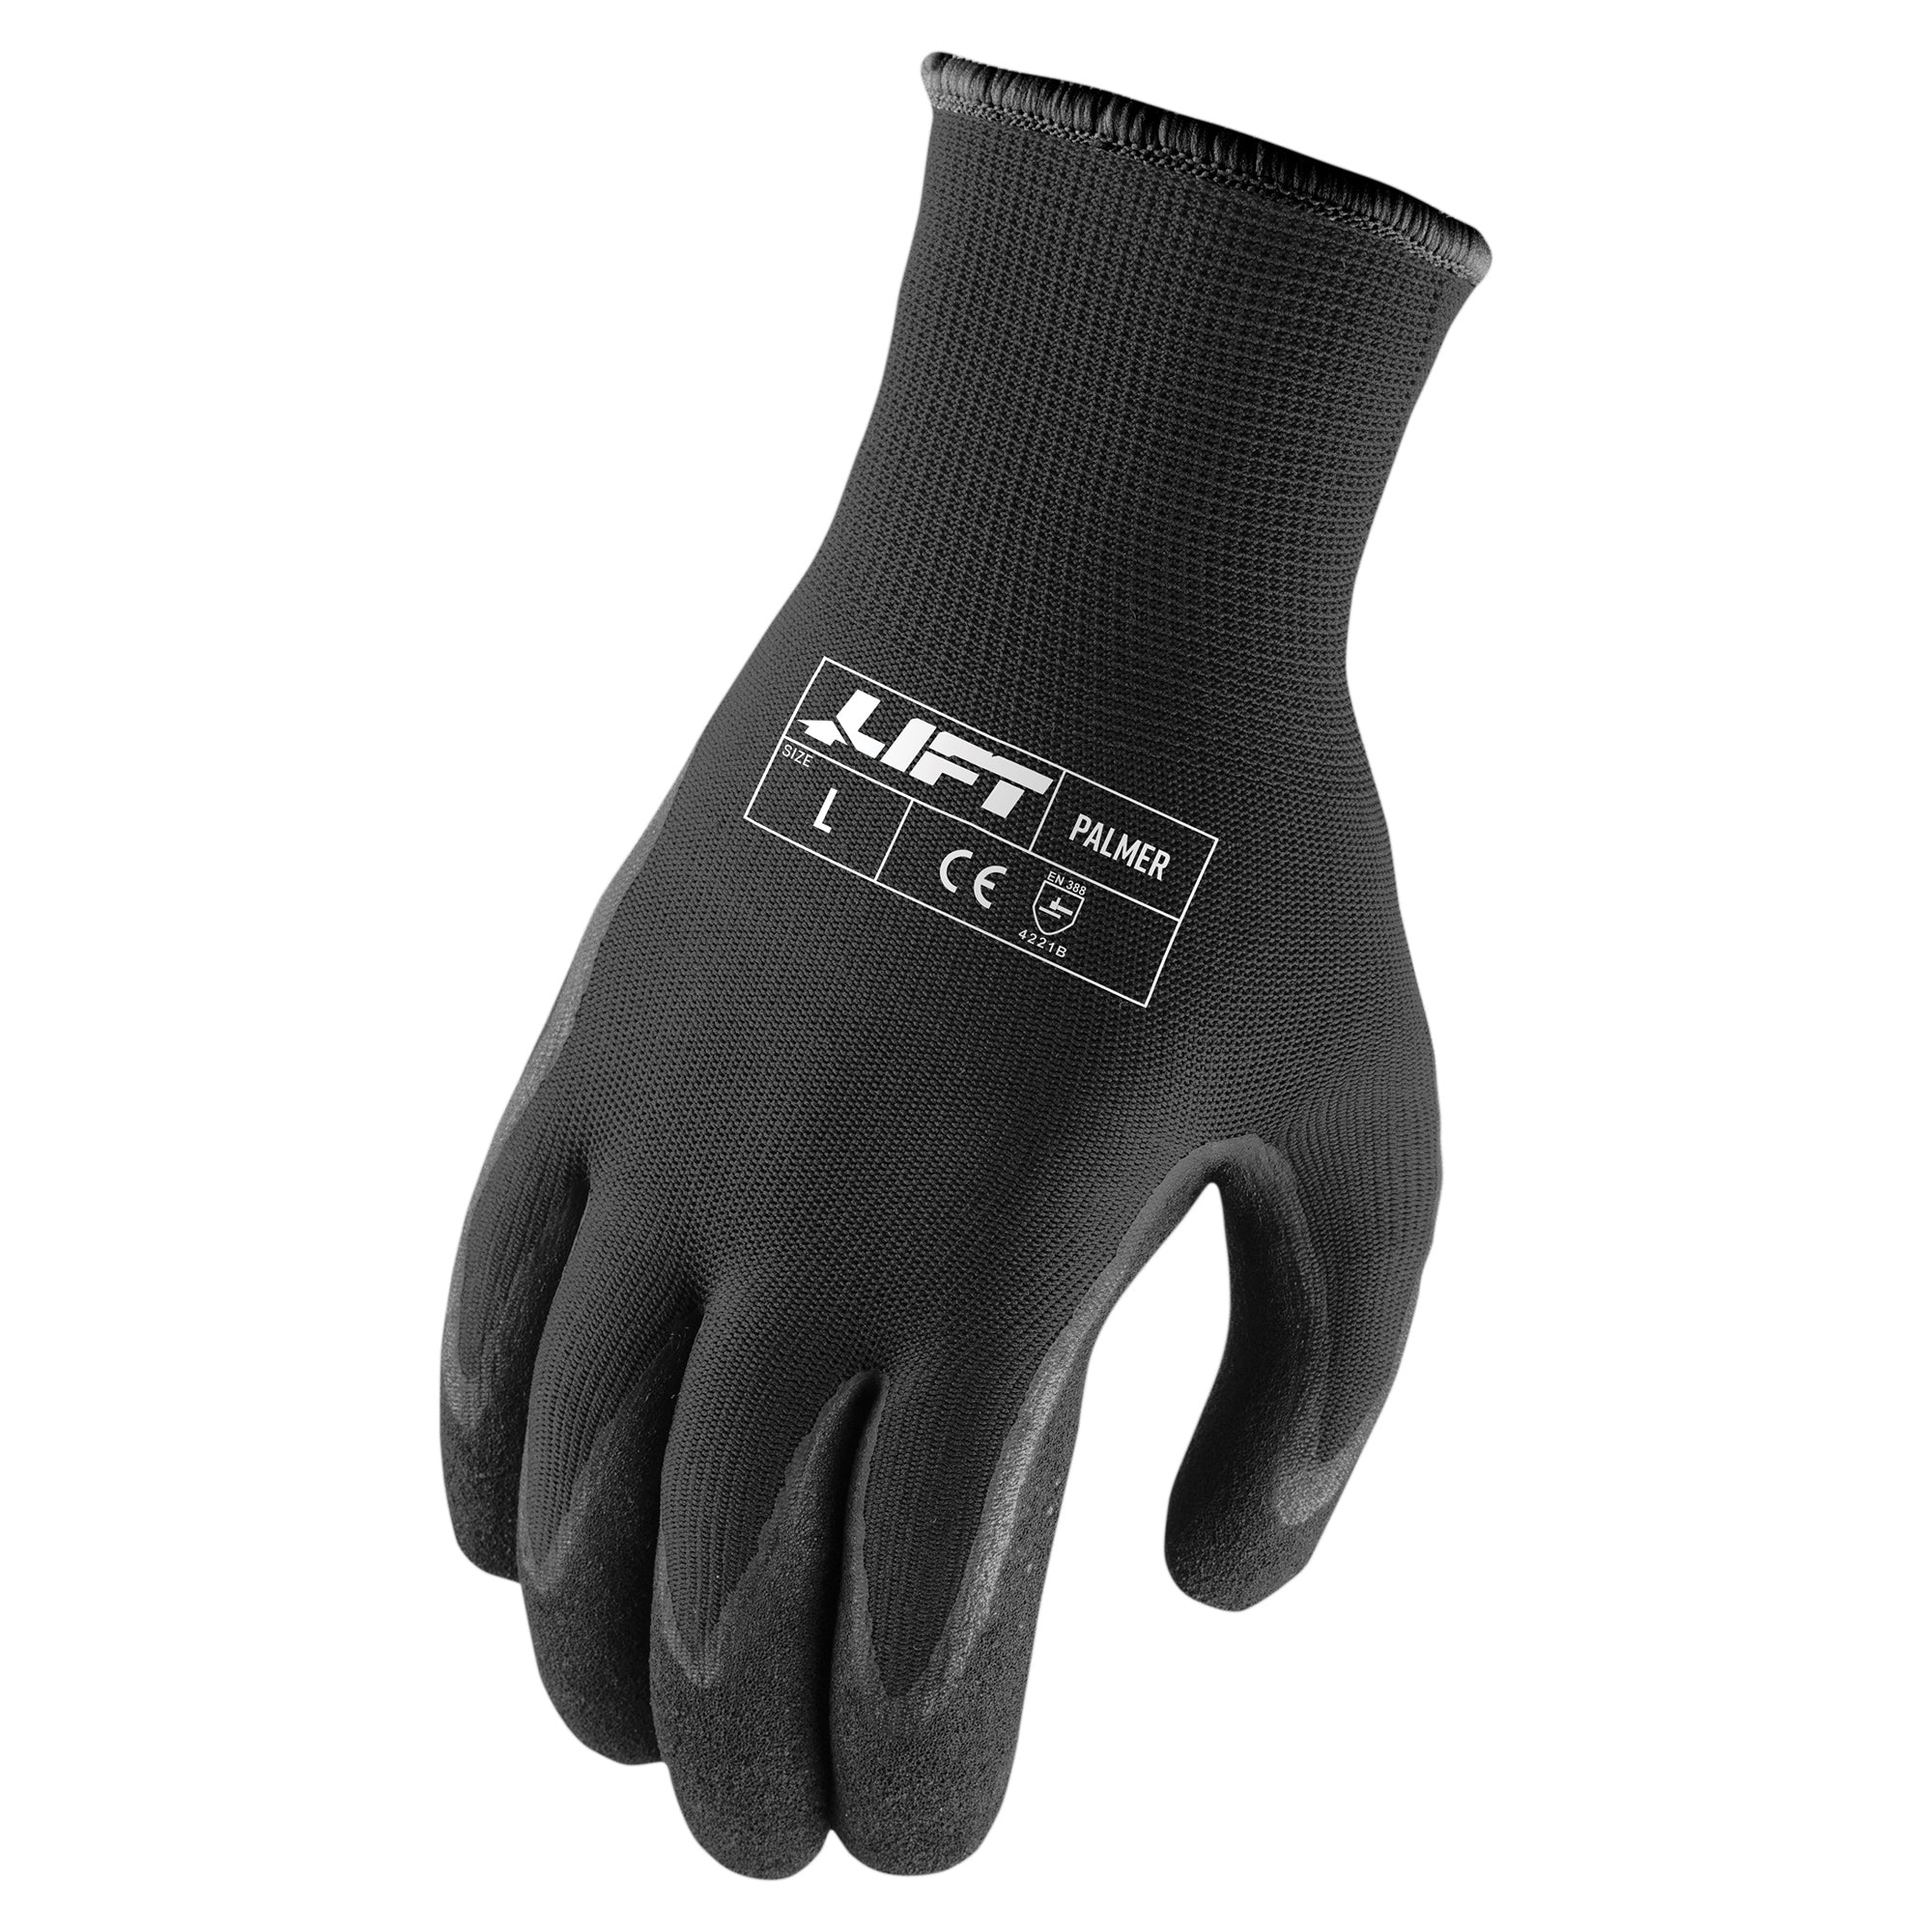 MICRODOT Nitrile Grip Gloves, Nylon/spandex, Studded palm for slip-free  grip, Elastic wrist - 12 PAIRS - Radians RWG11